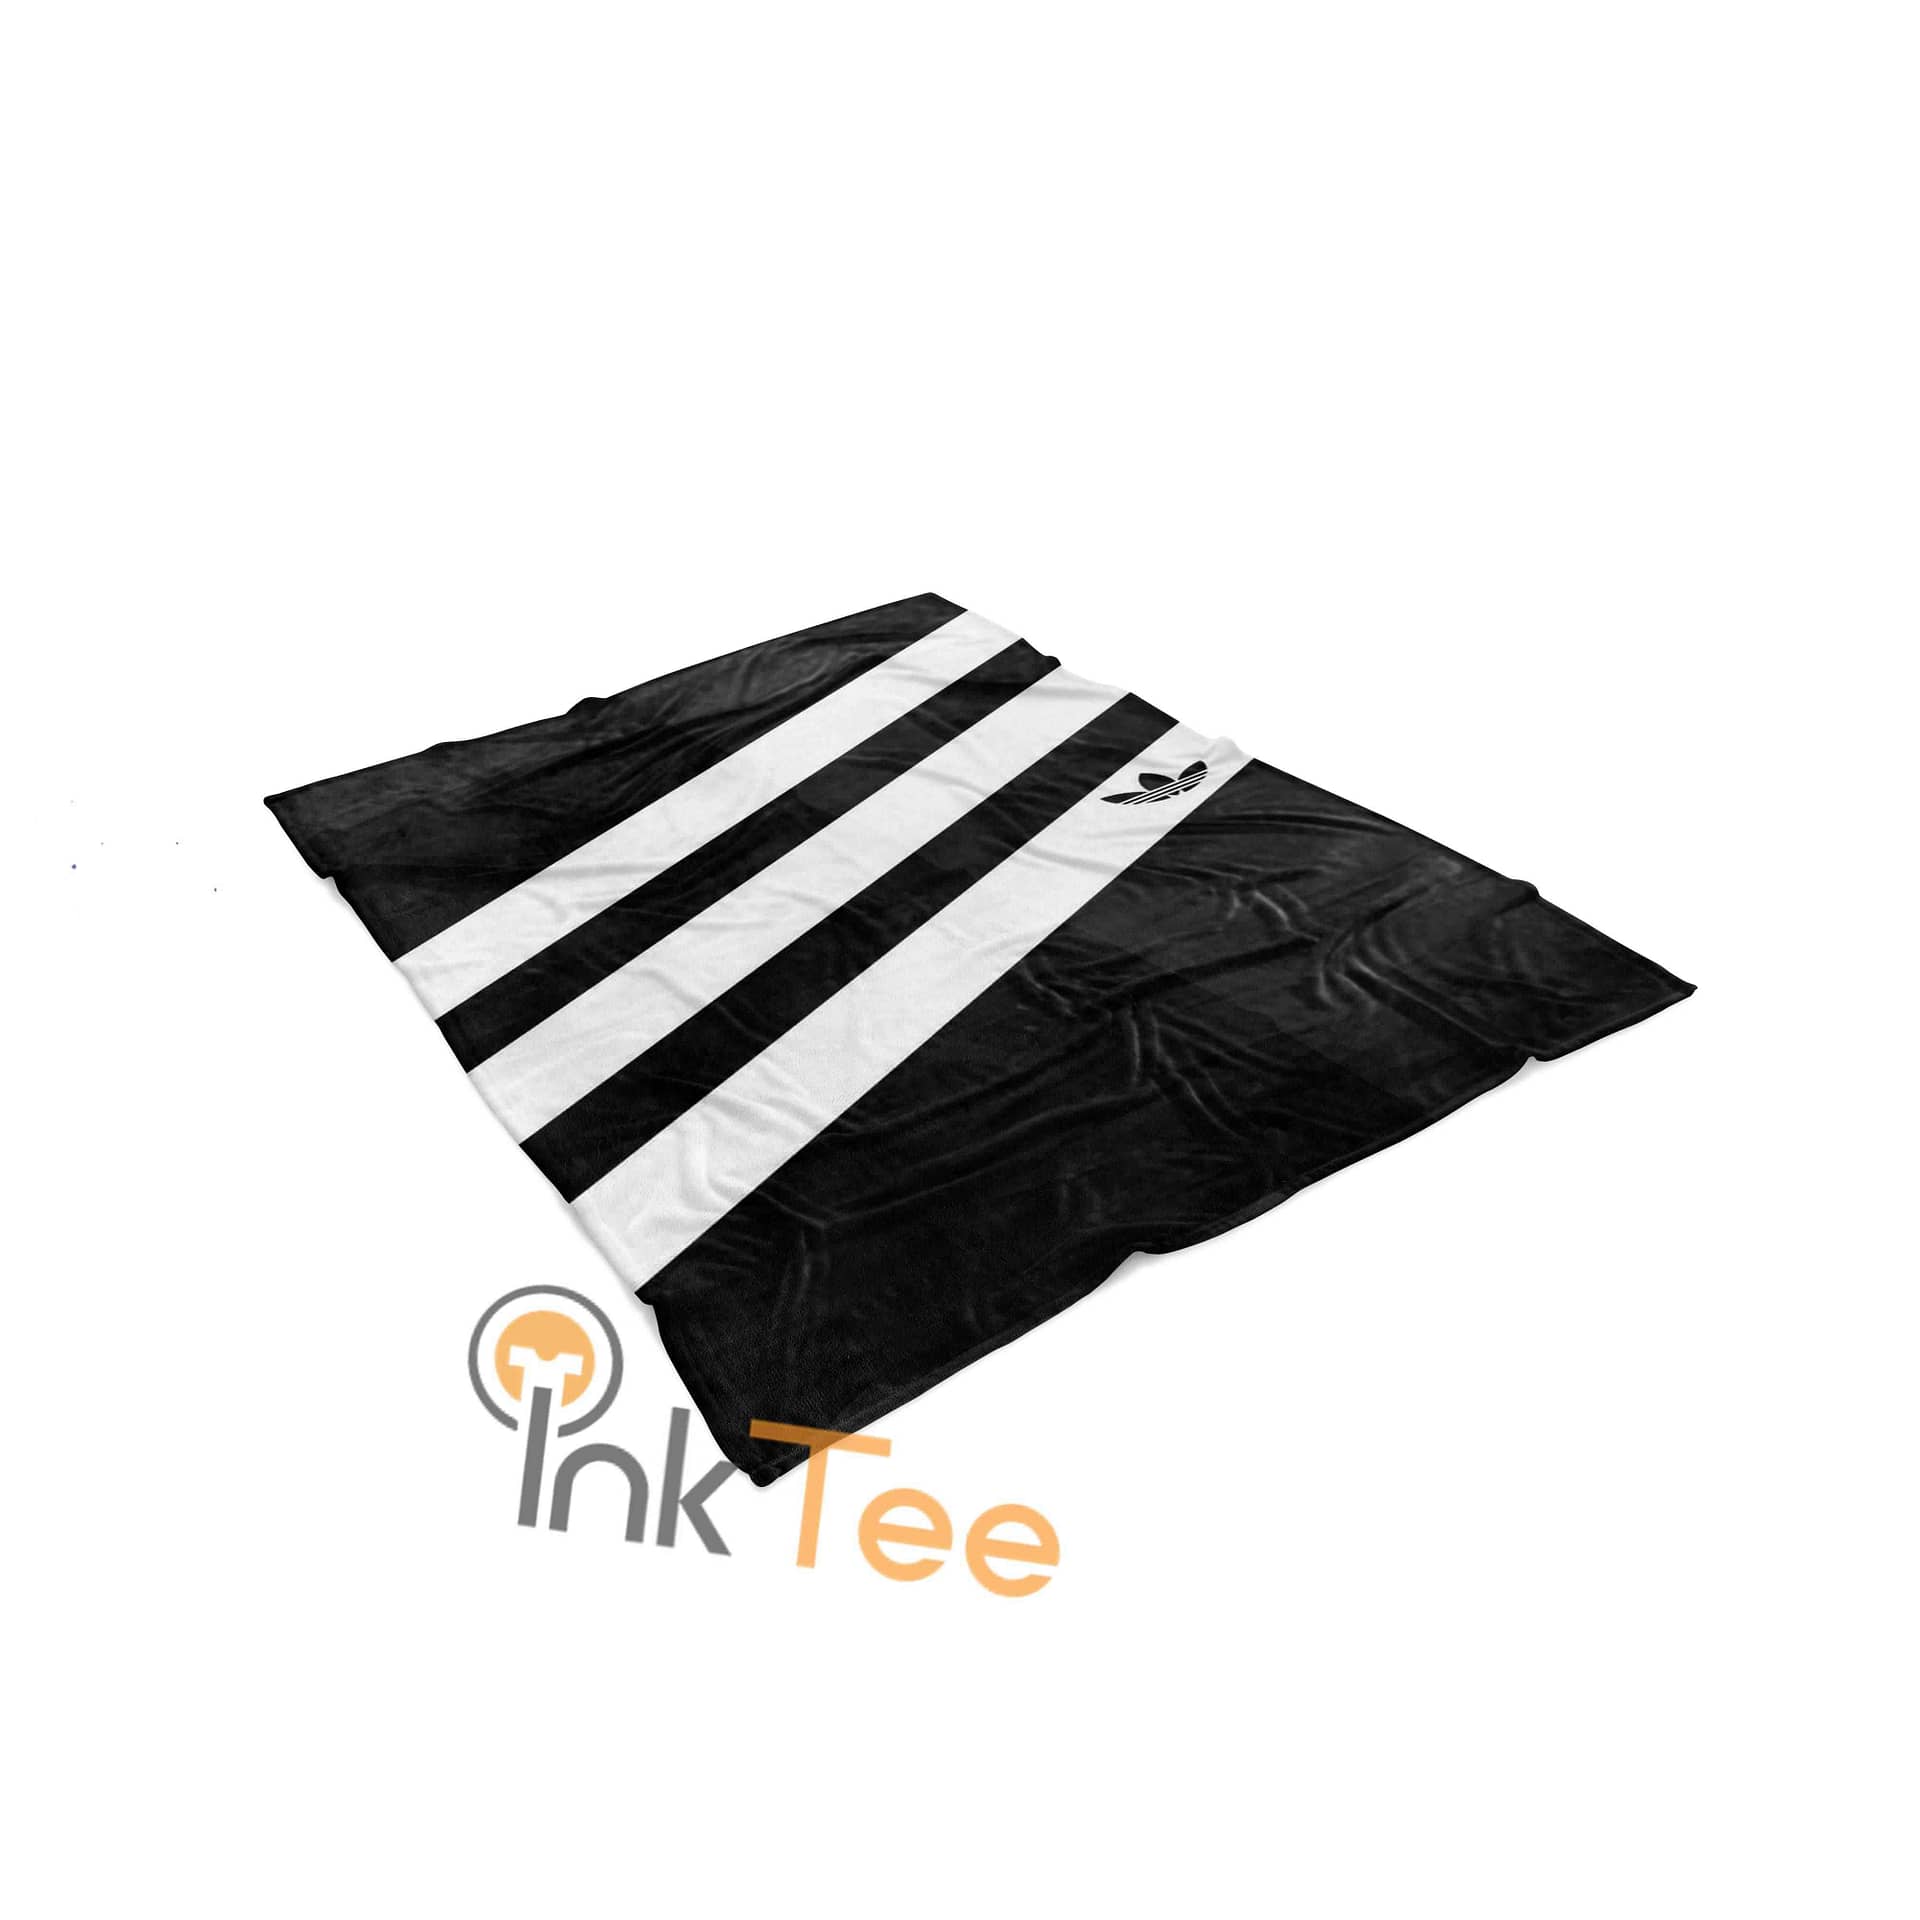 Inktee Store - Adidas Limited Edition Amazon Best Seller Sku 4032 Fleece Blanket Image